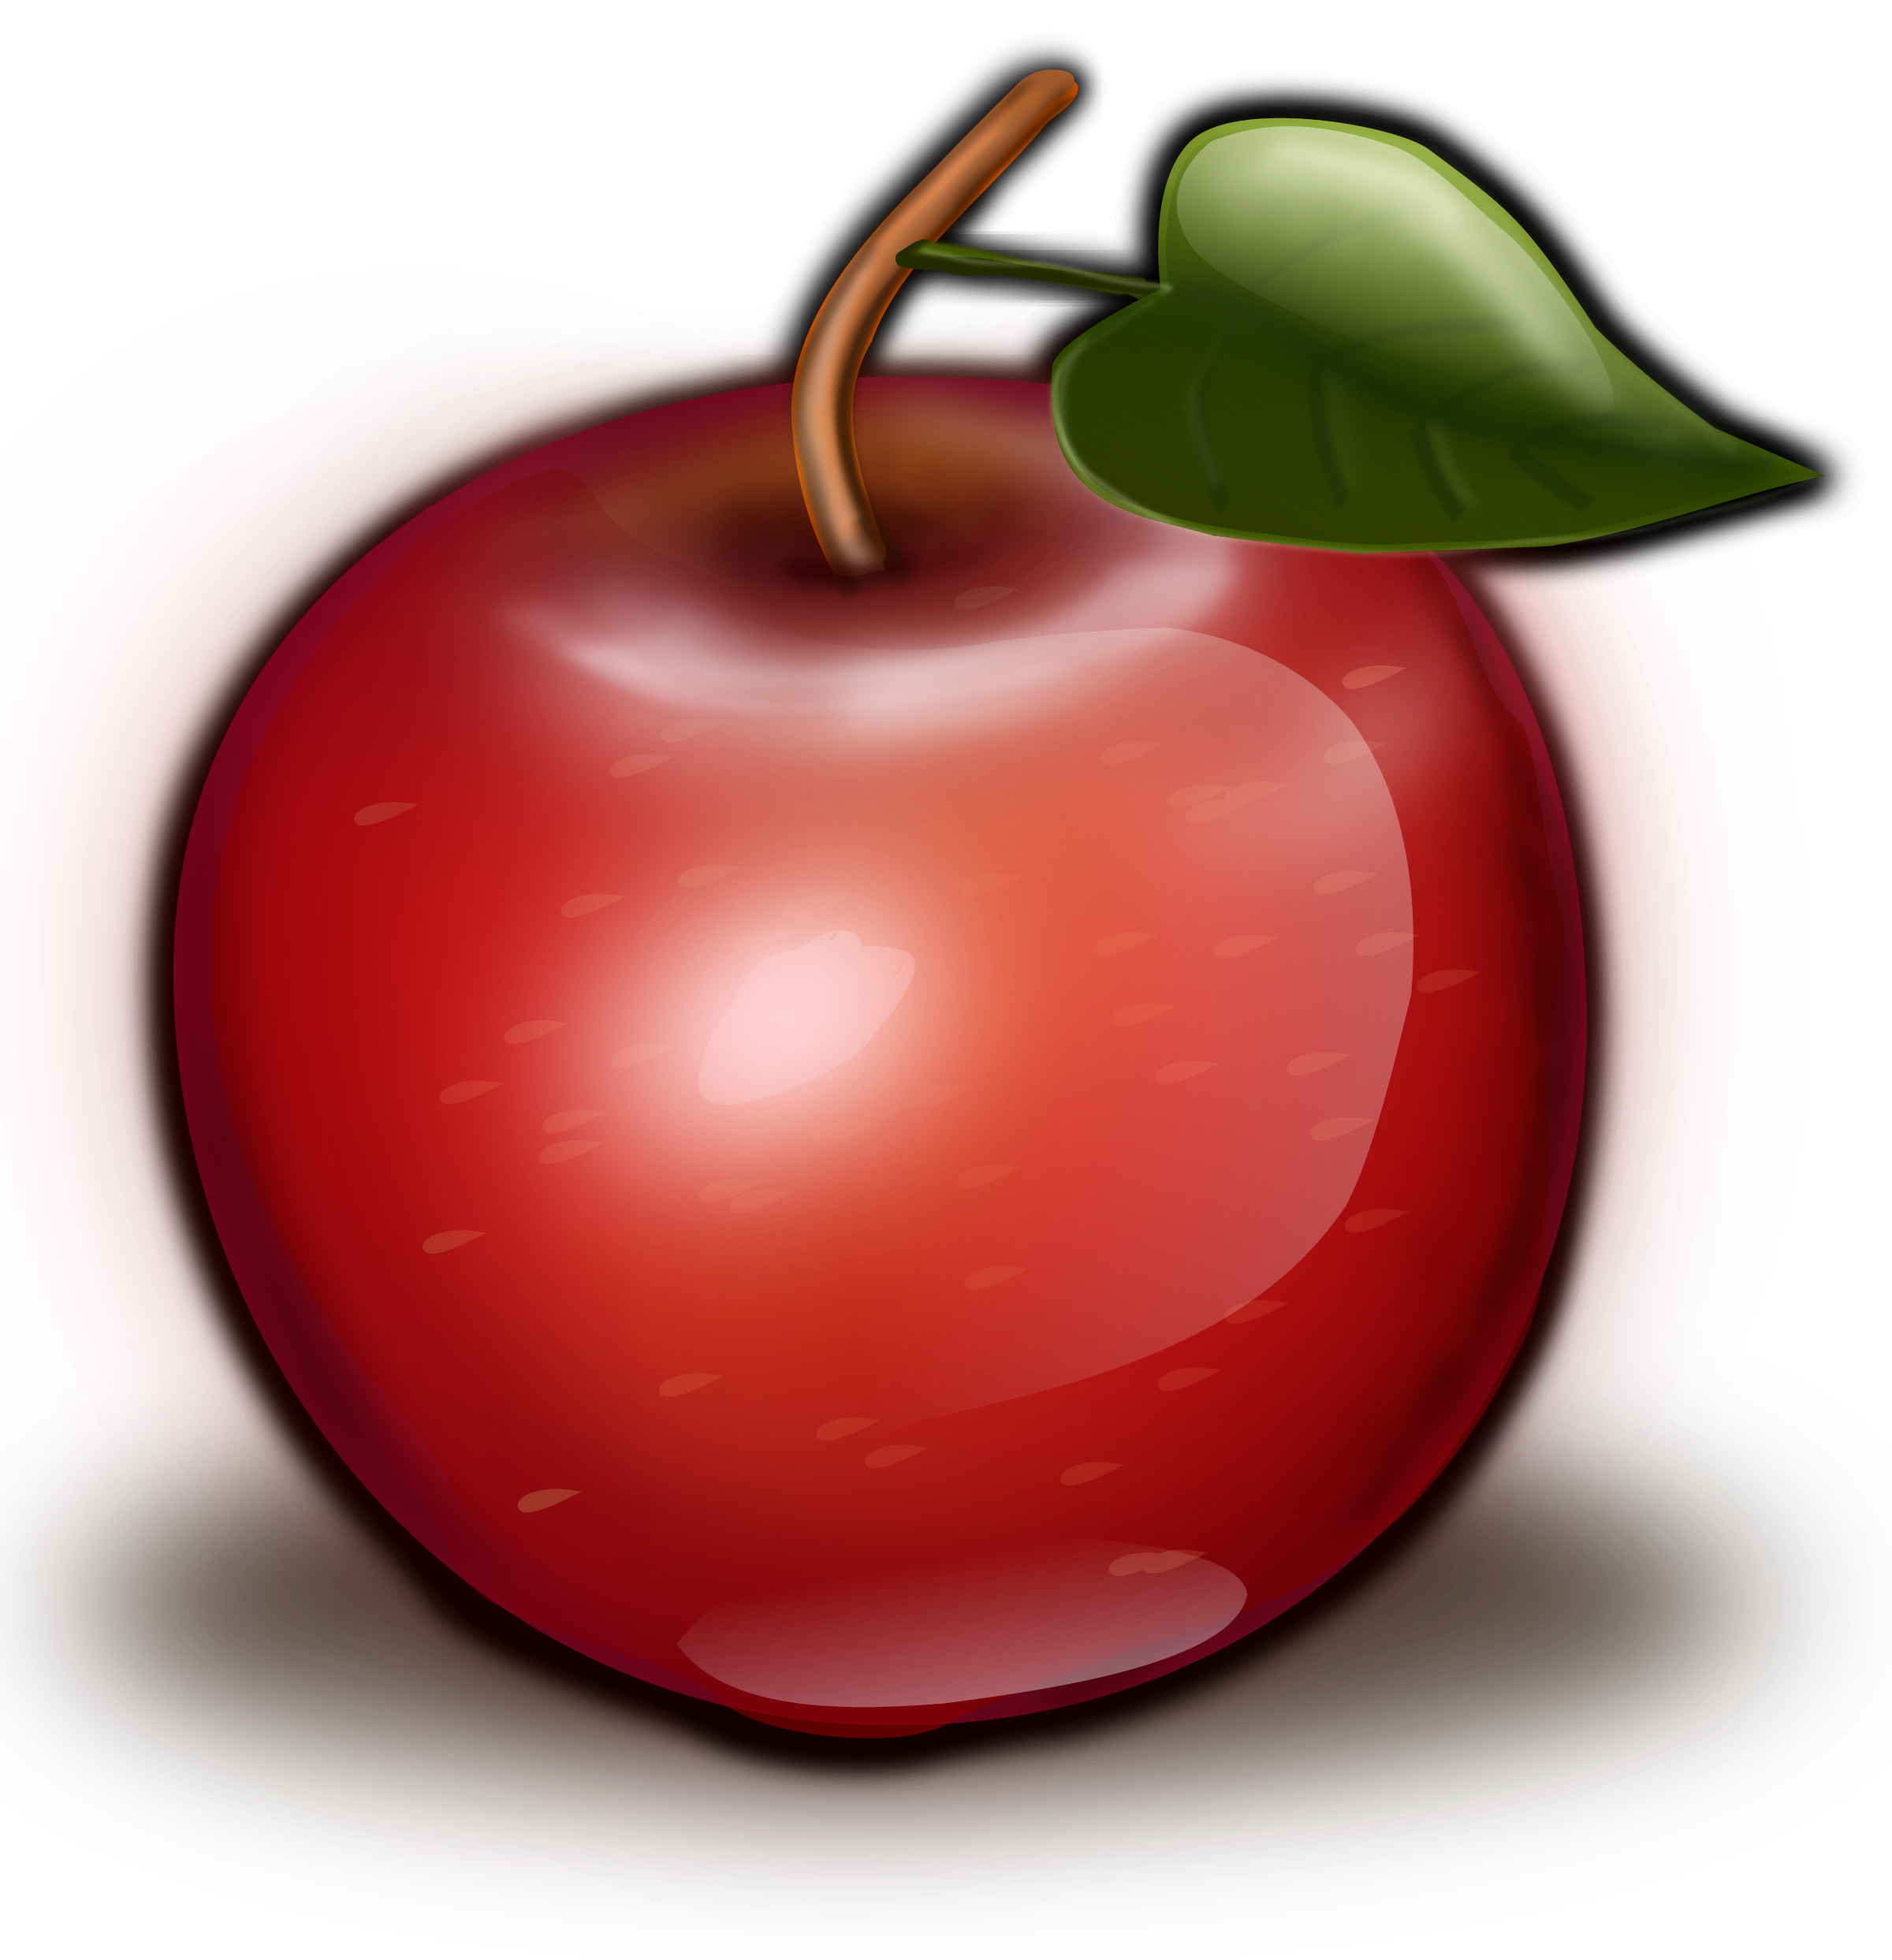 Download Clipart apples transparent background, Clipart apples ...